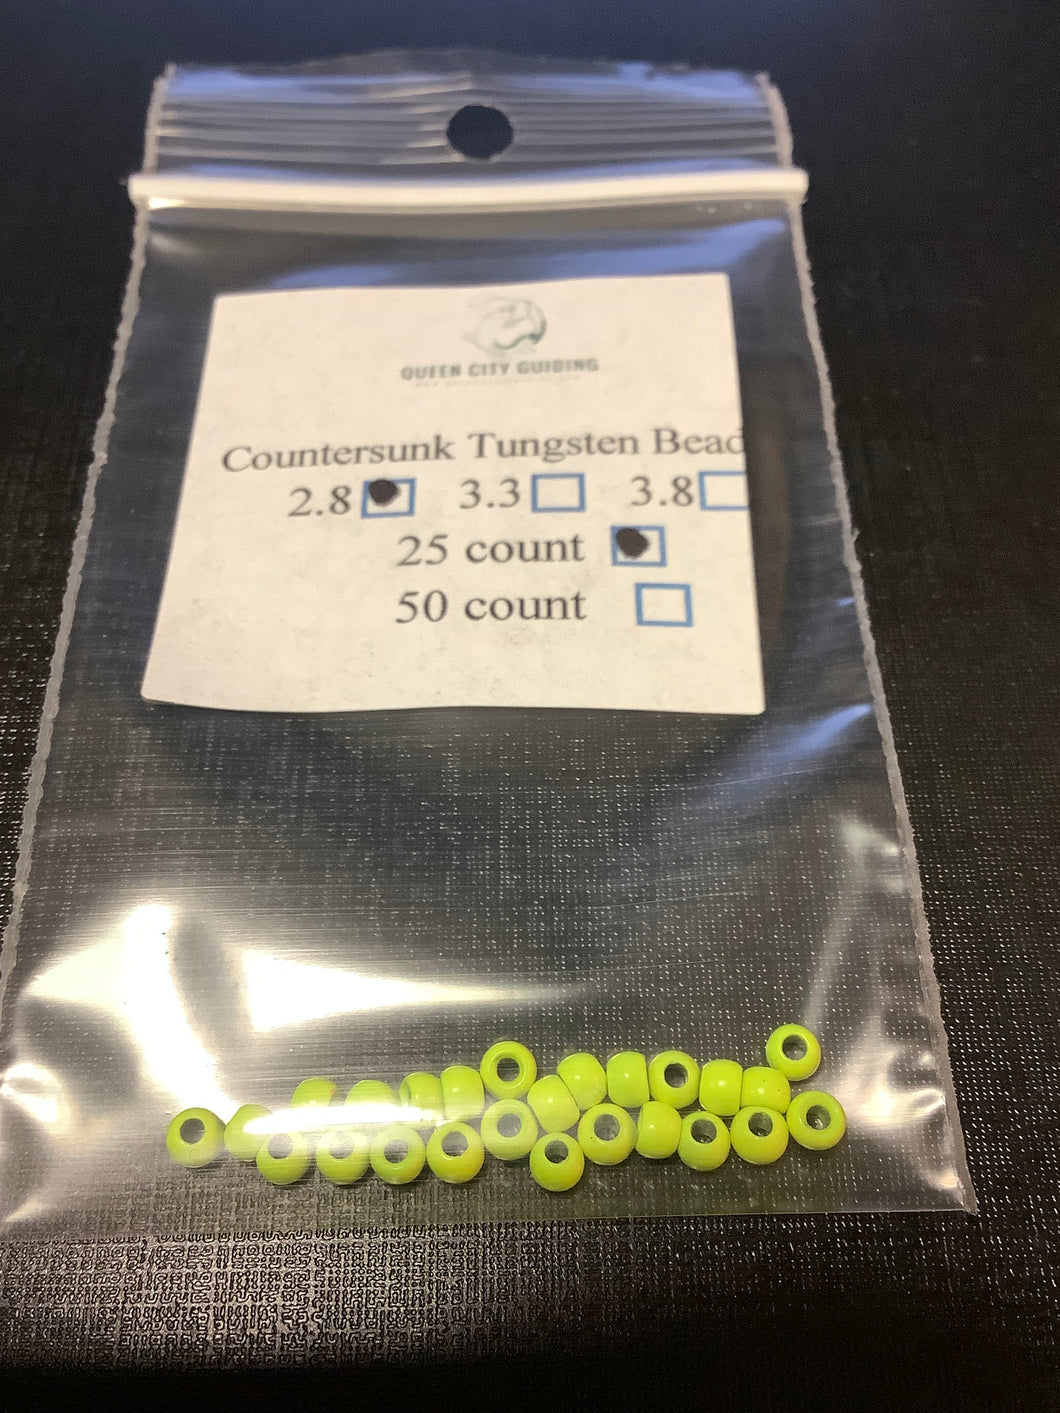 QCG Countersunk Tungsten Beads 25 pack (2.8 3.3 3.8 mm)